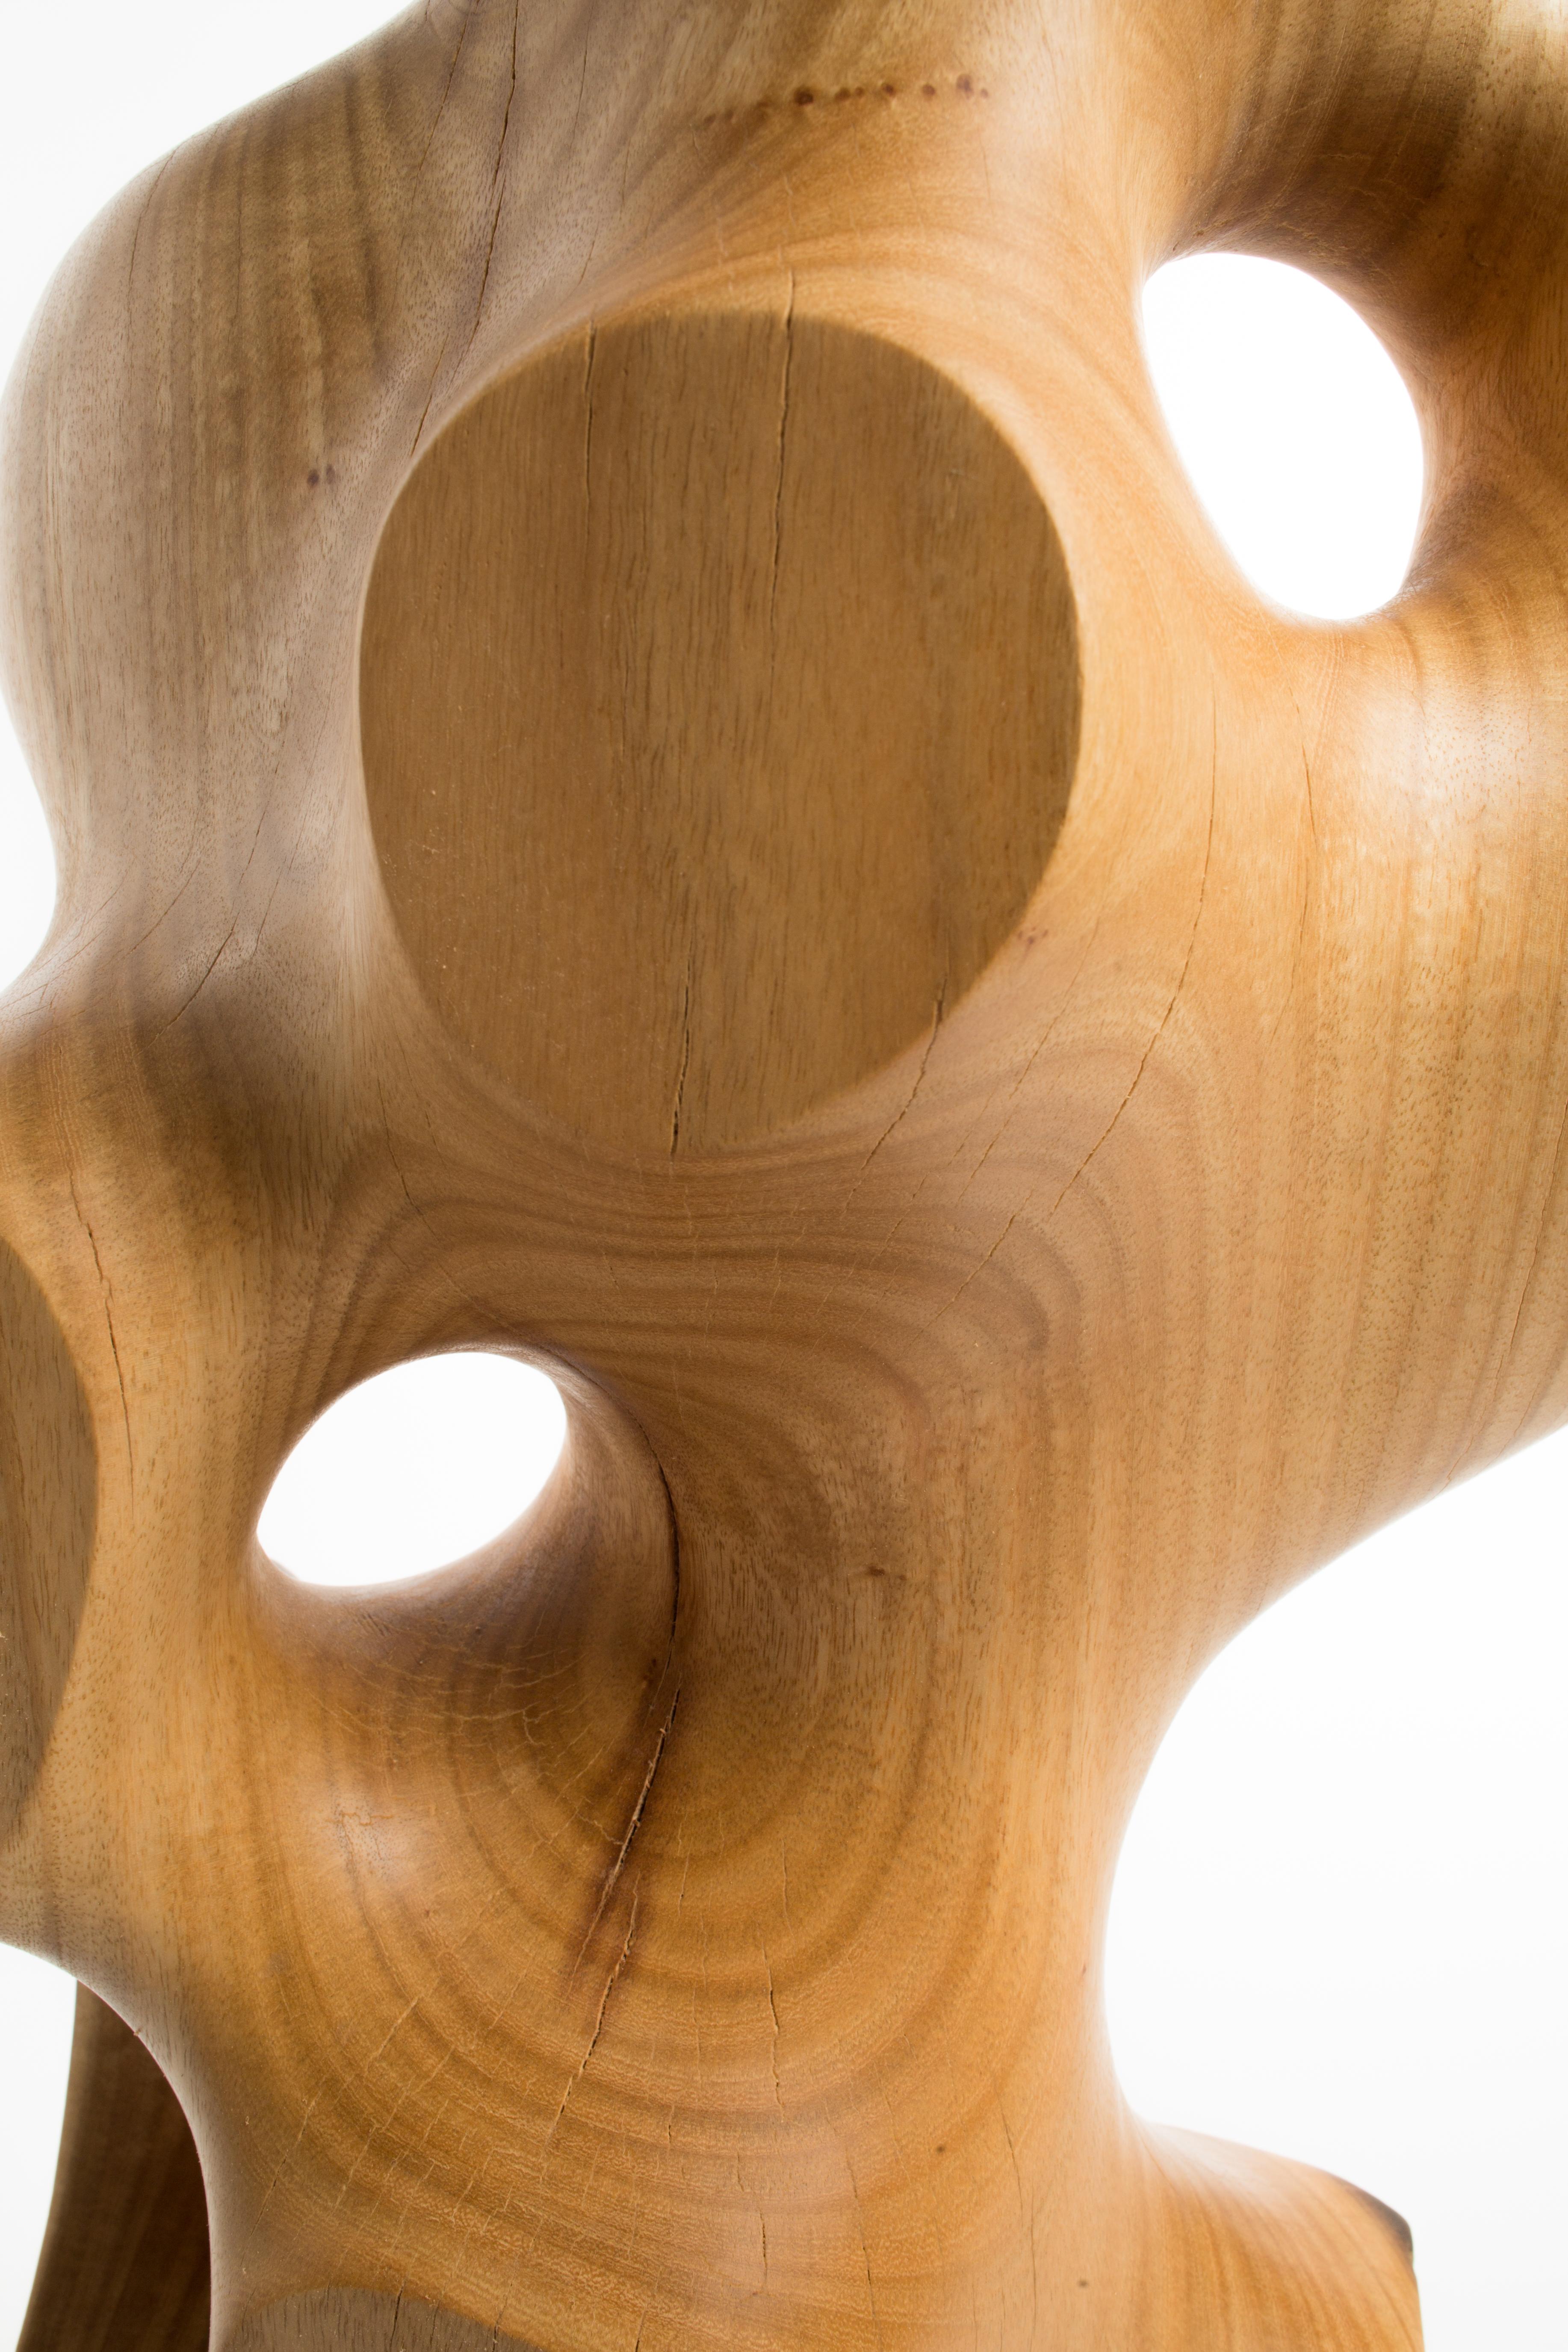 Driaan Claassen for Reticence, Abstract Geometric Sculpture, Wooden Cuboid 009 4